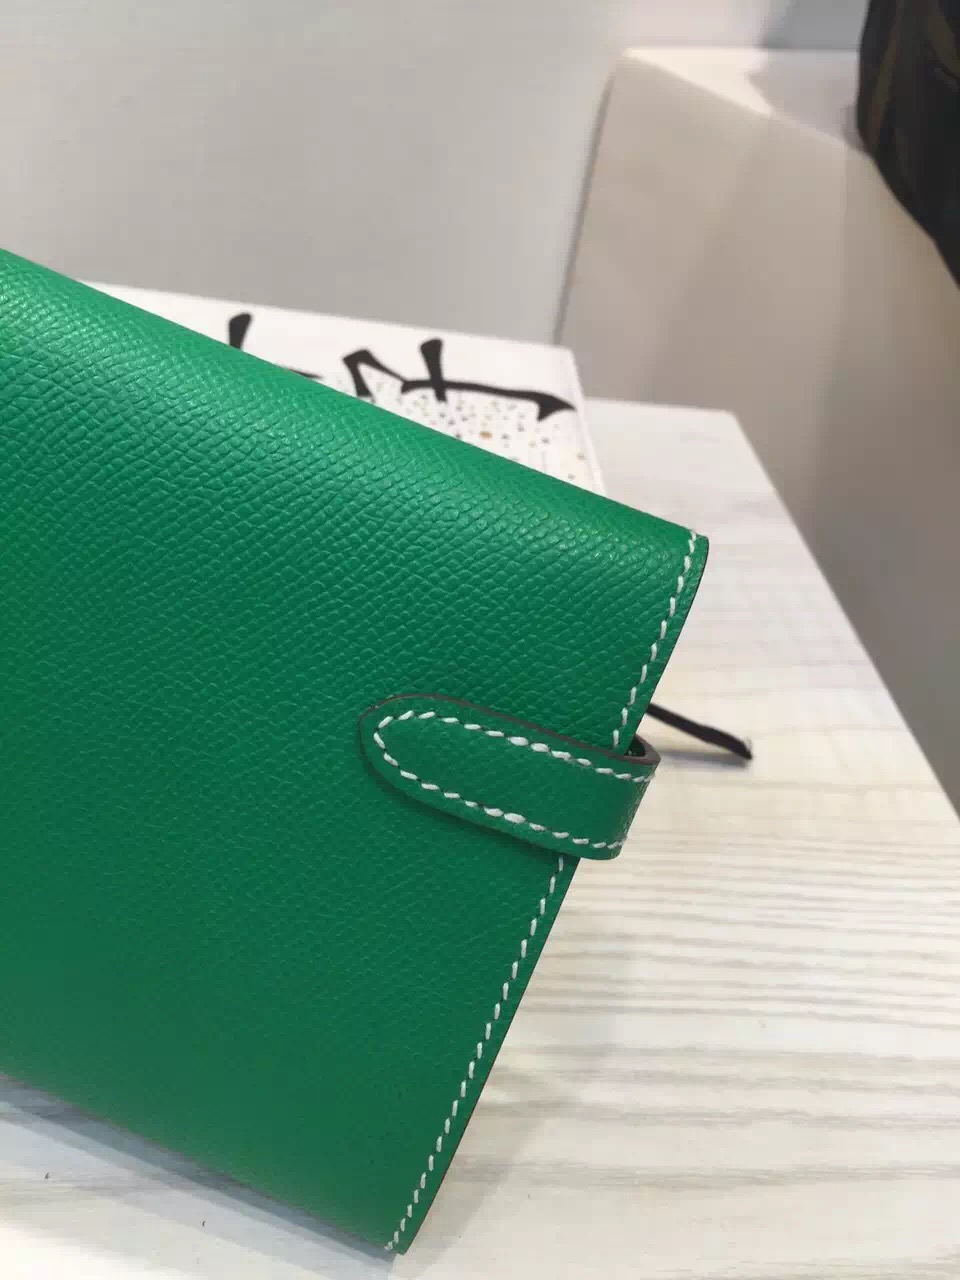 Discount Hermes Epsom Leather Bamboo Green Kelly Wallet Clutch Handbag